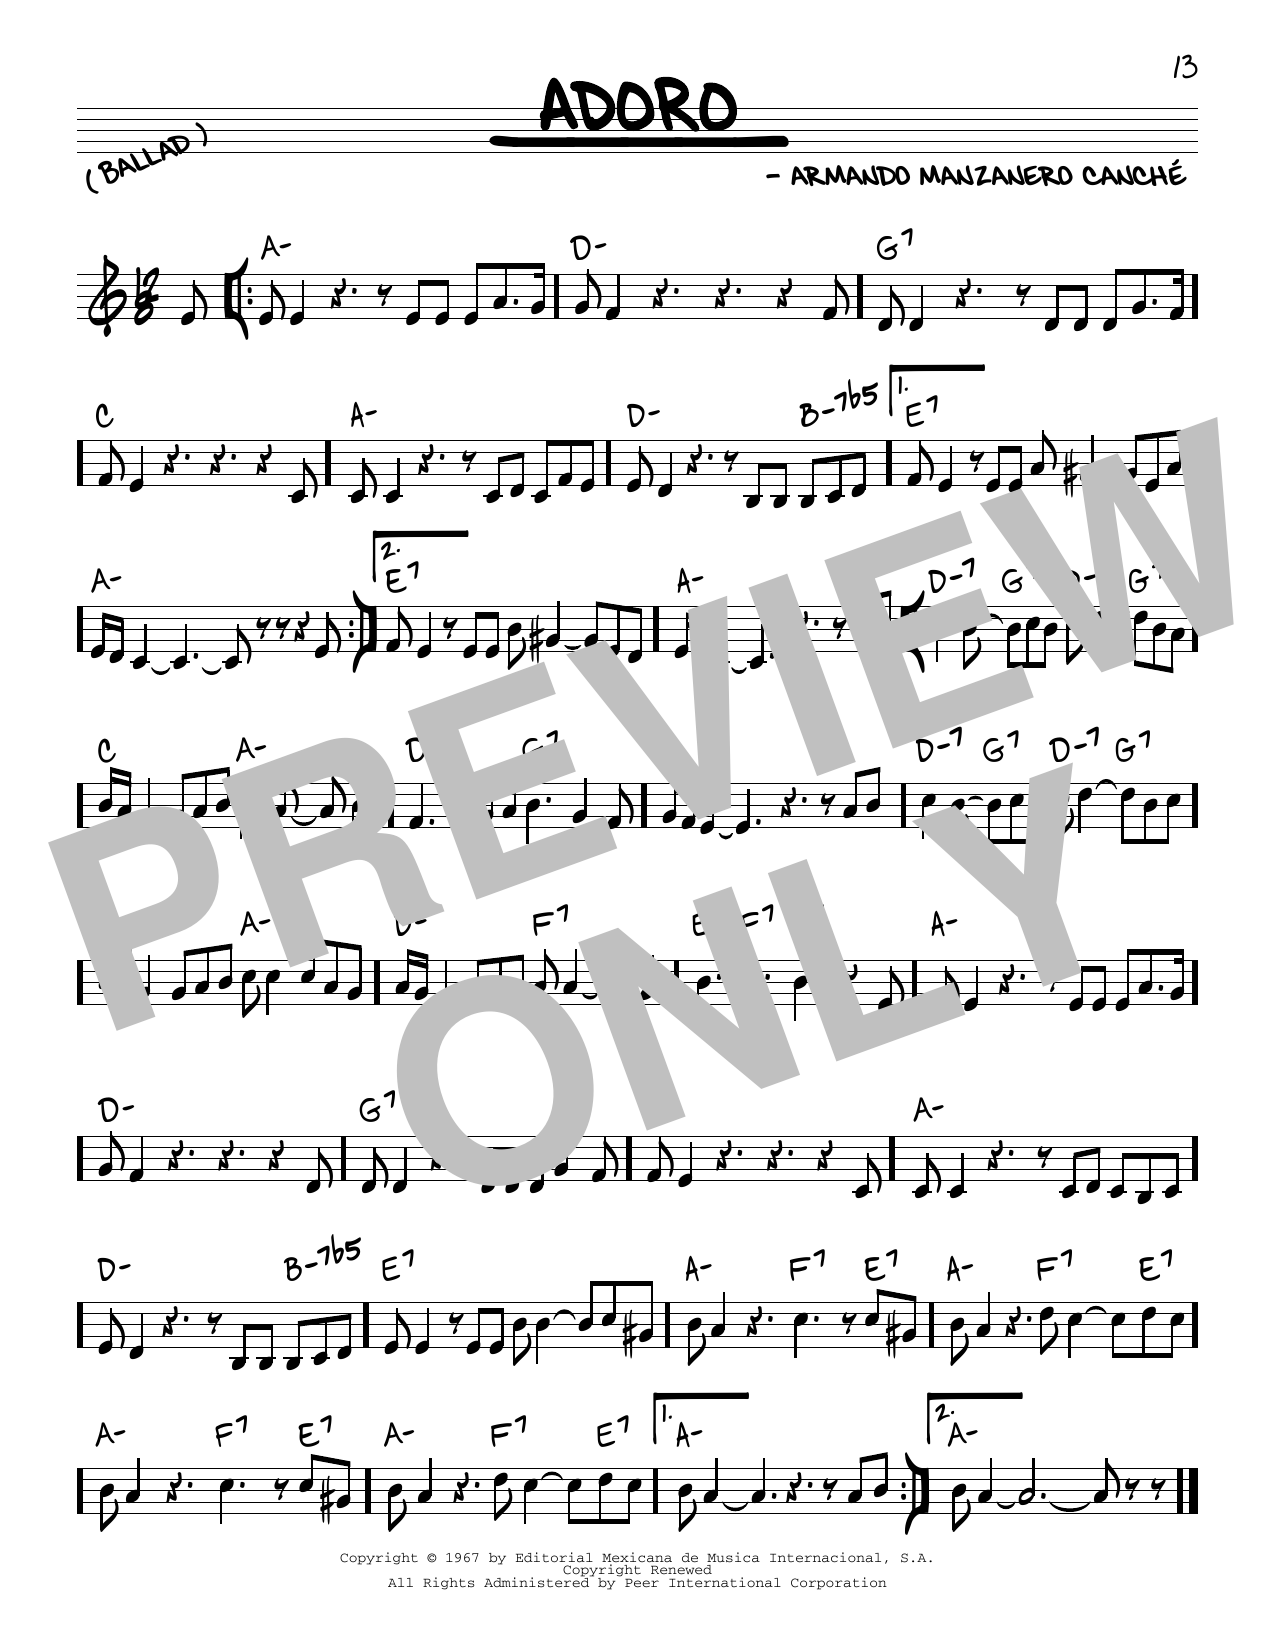 Armando Manzanero Canche Adoro Sheet Music Notes & Chords for Real Book – Melody & Chords - Download or Print PDF